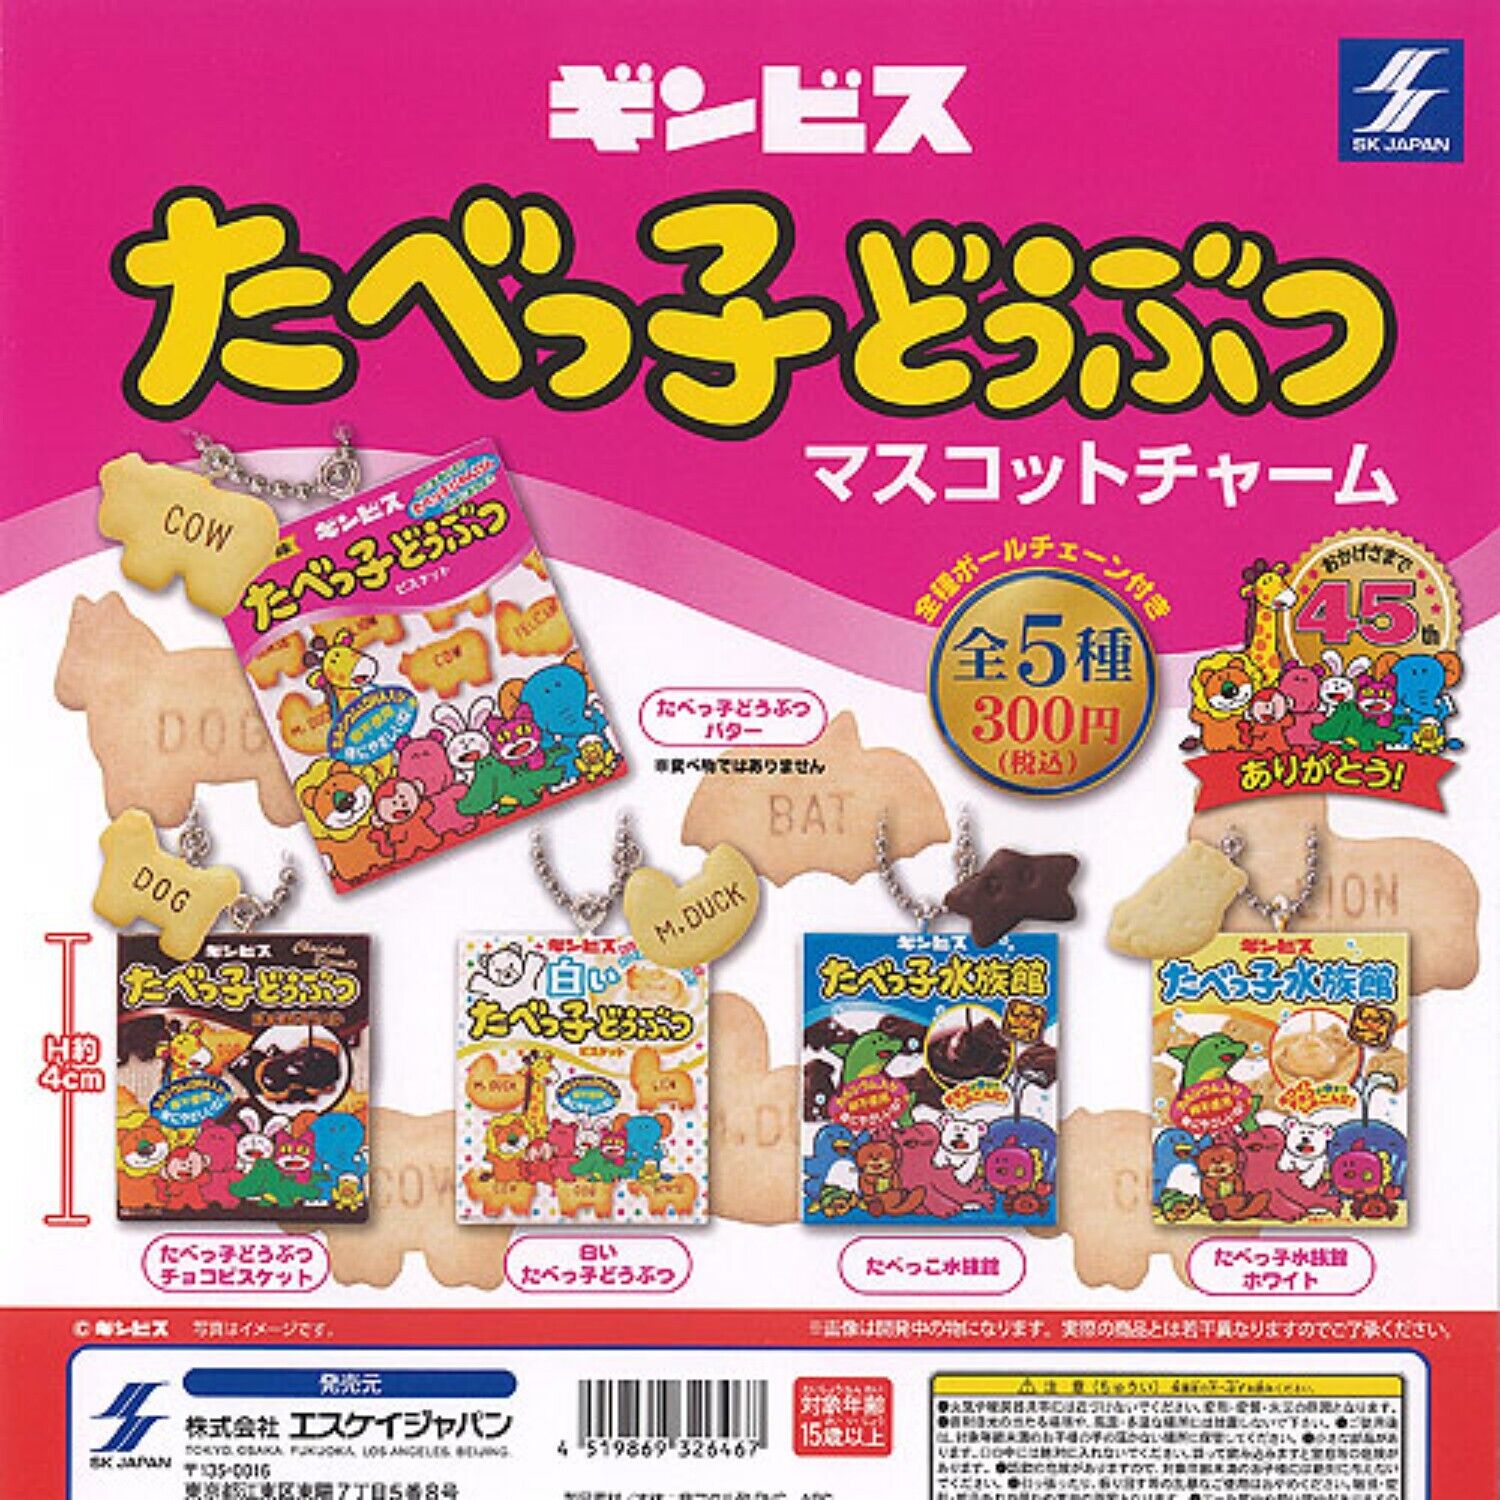 Tabekko Animal Mascot Charm Capsule Toy 5 Types Full Comp Set Gacha New Japan